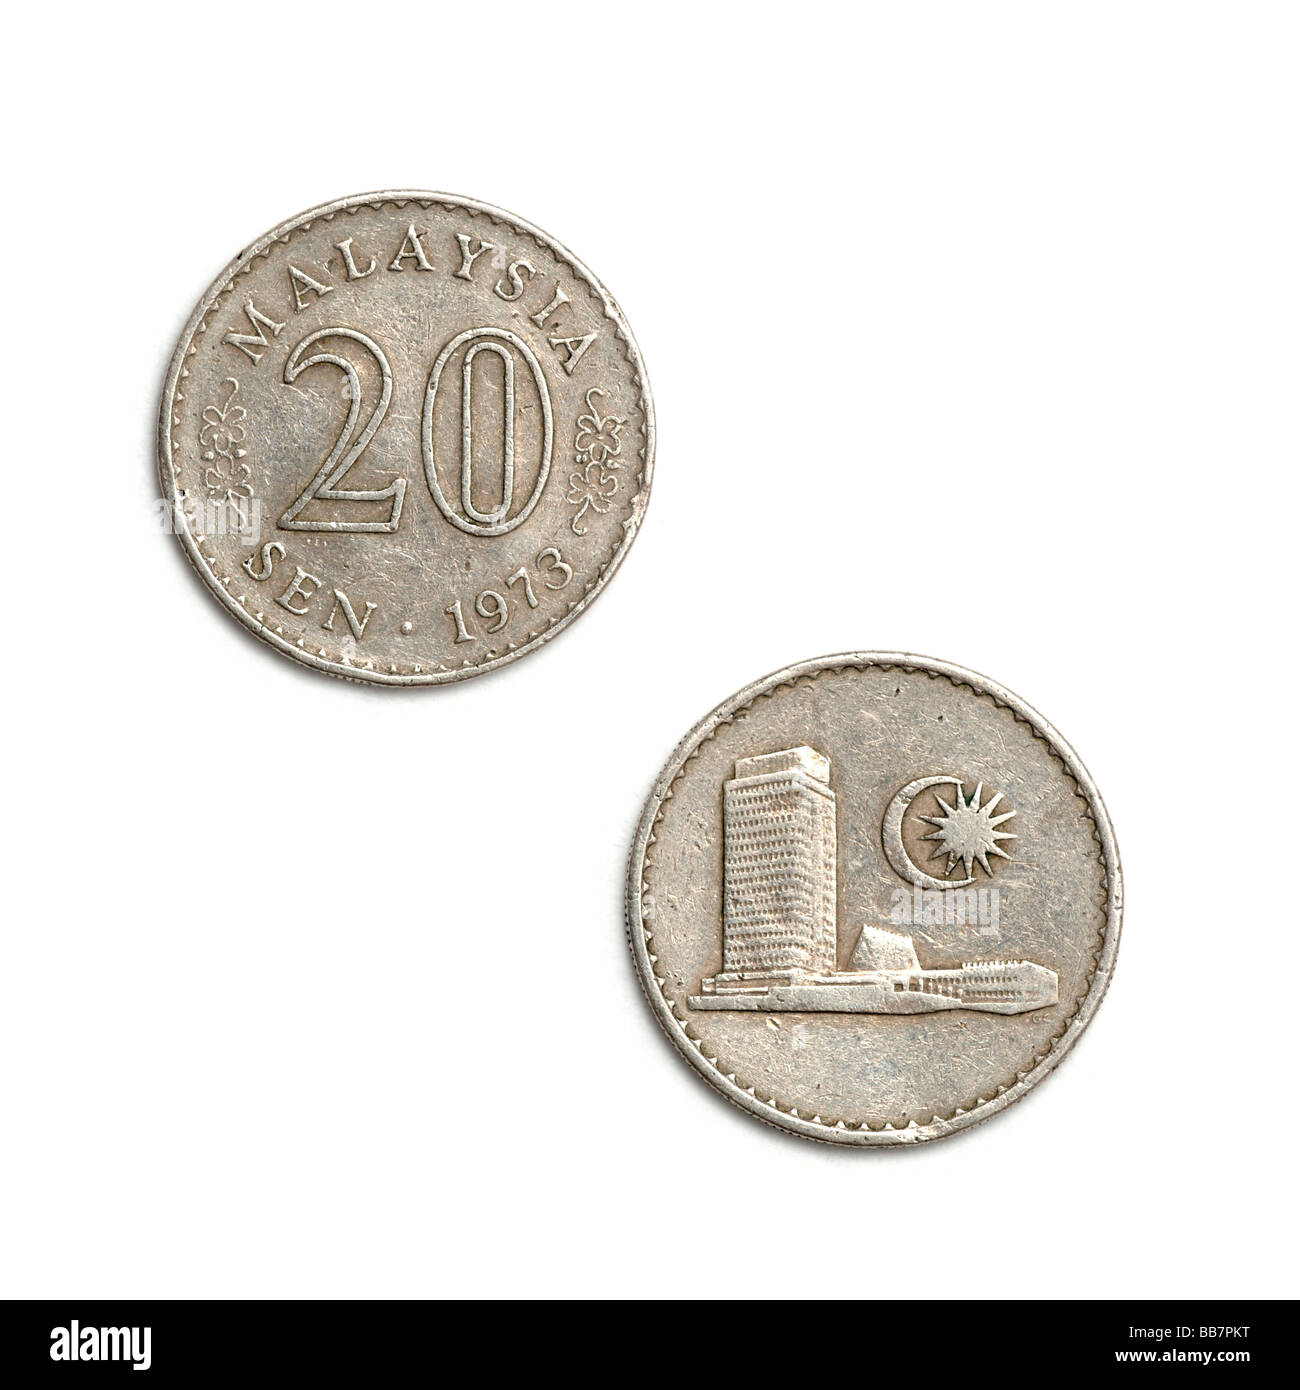 'Malaysian coin' Stock Photo